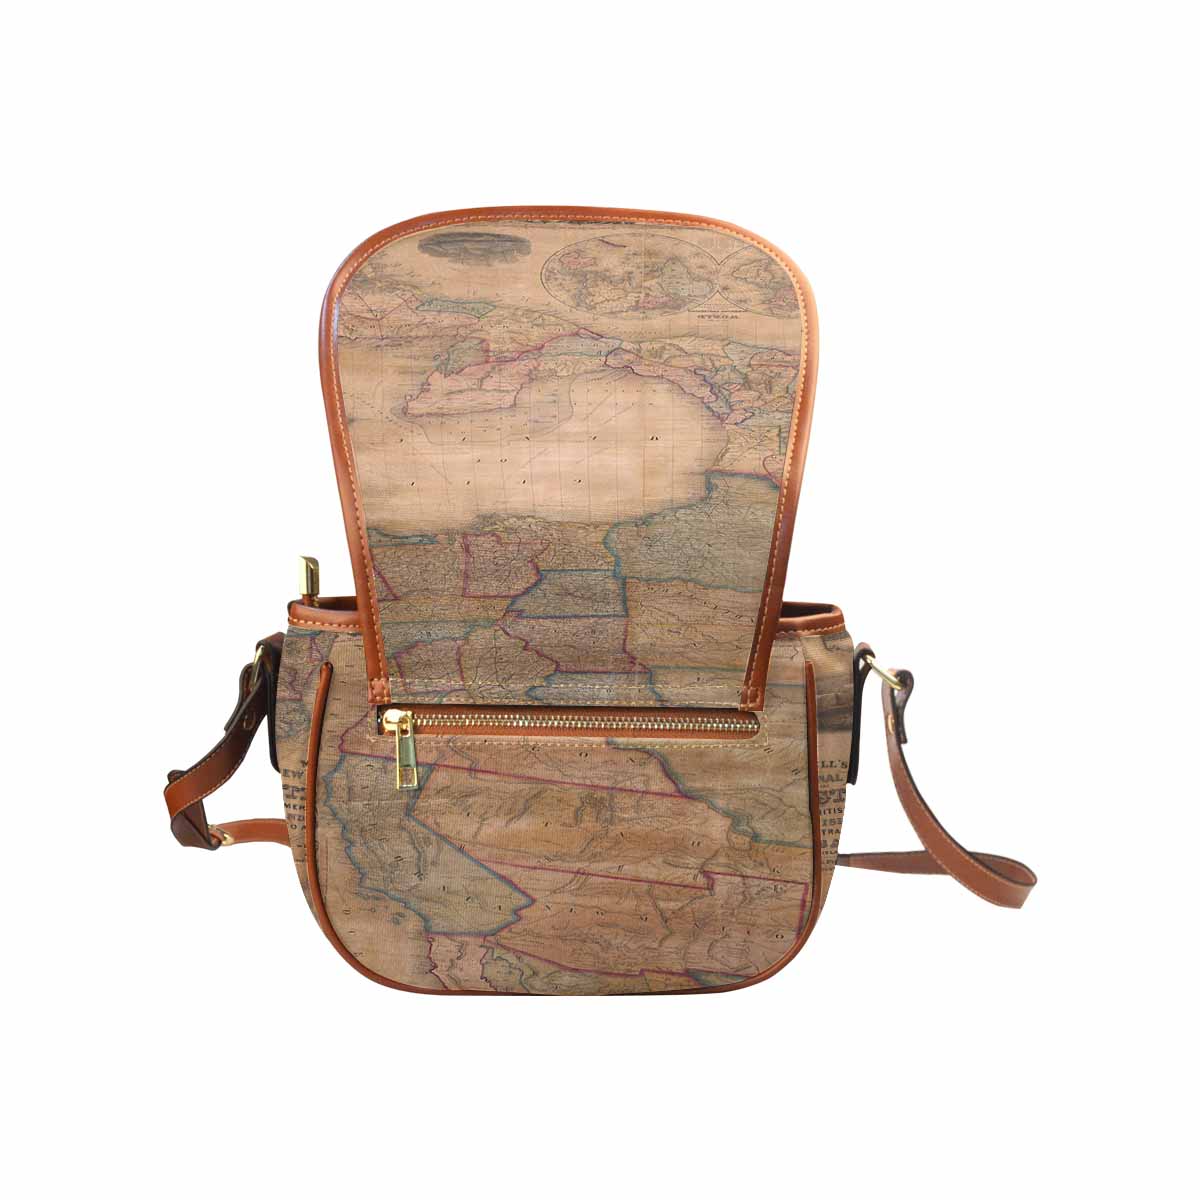 Antique Map design Handbag, saddle bag, Design 28